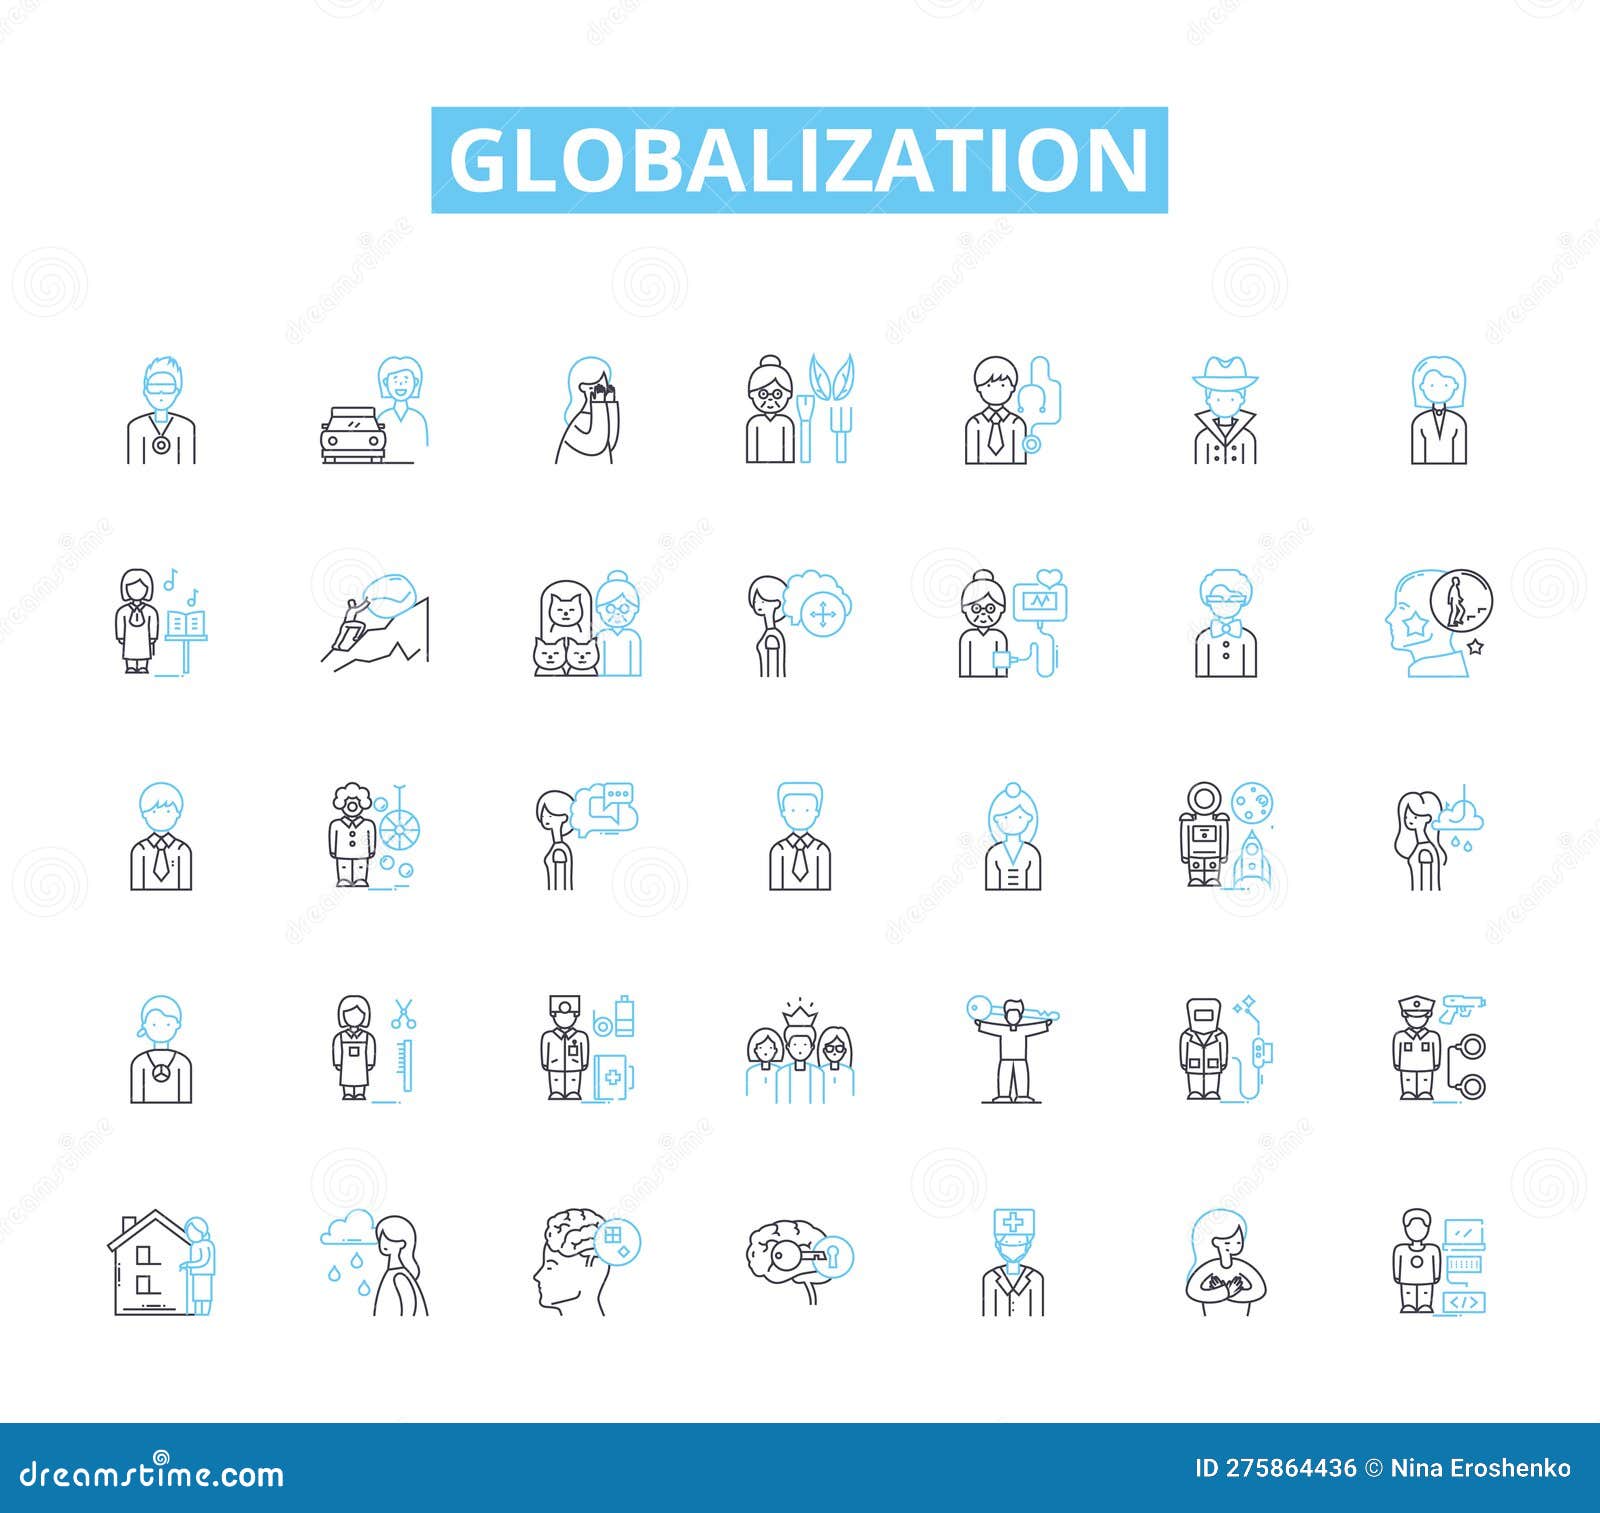 globalization linear icons set. interconnectedness, integration, interdependence, homogenization, cultural exchange